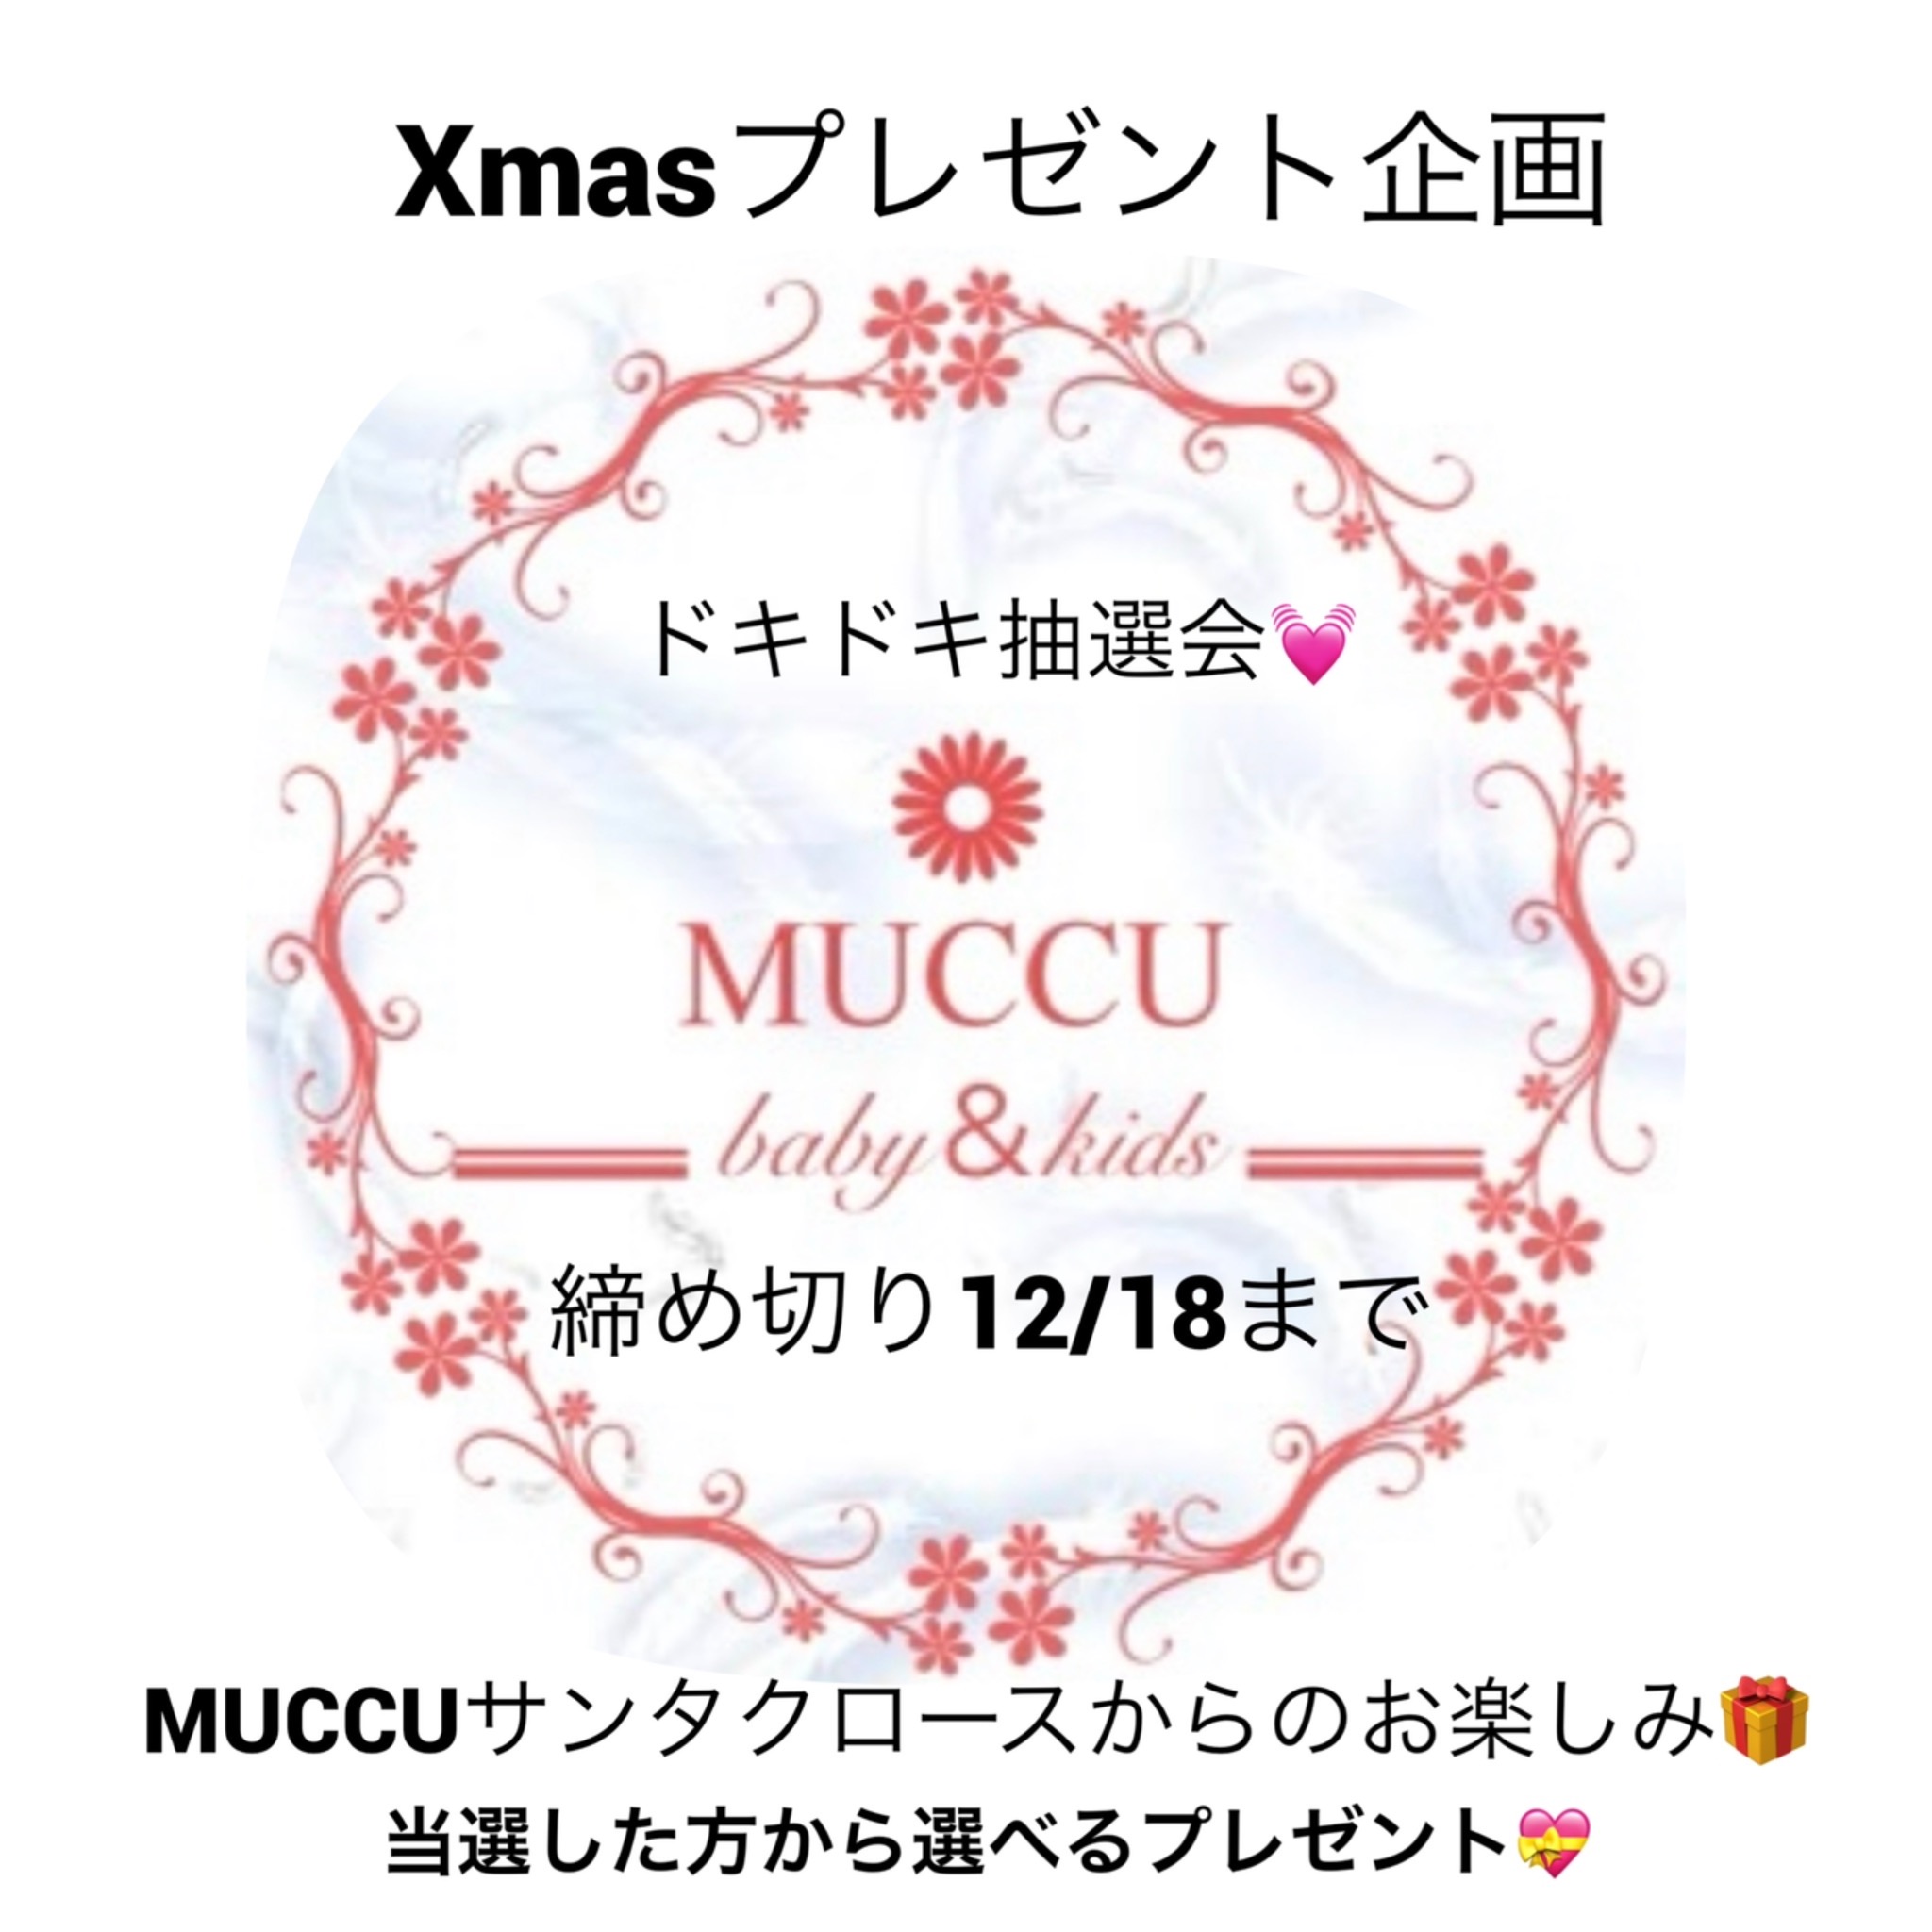 MUCCUクリスマスプレゼント企画Instagramにて開催♡